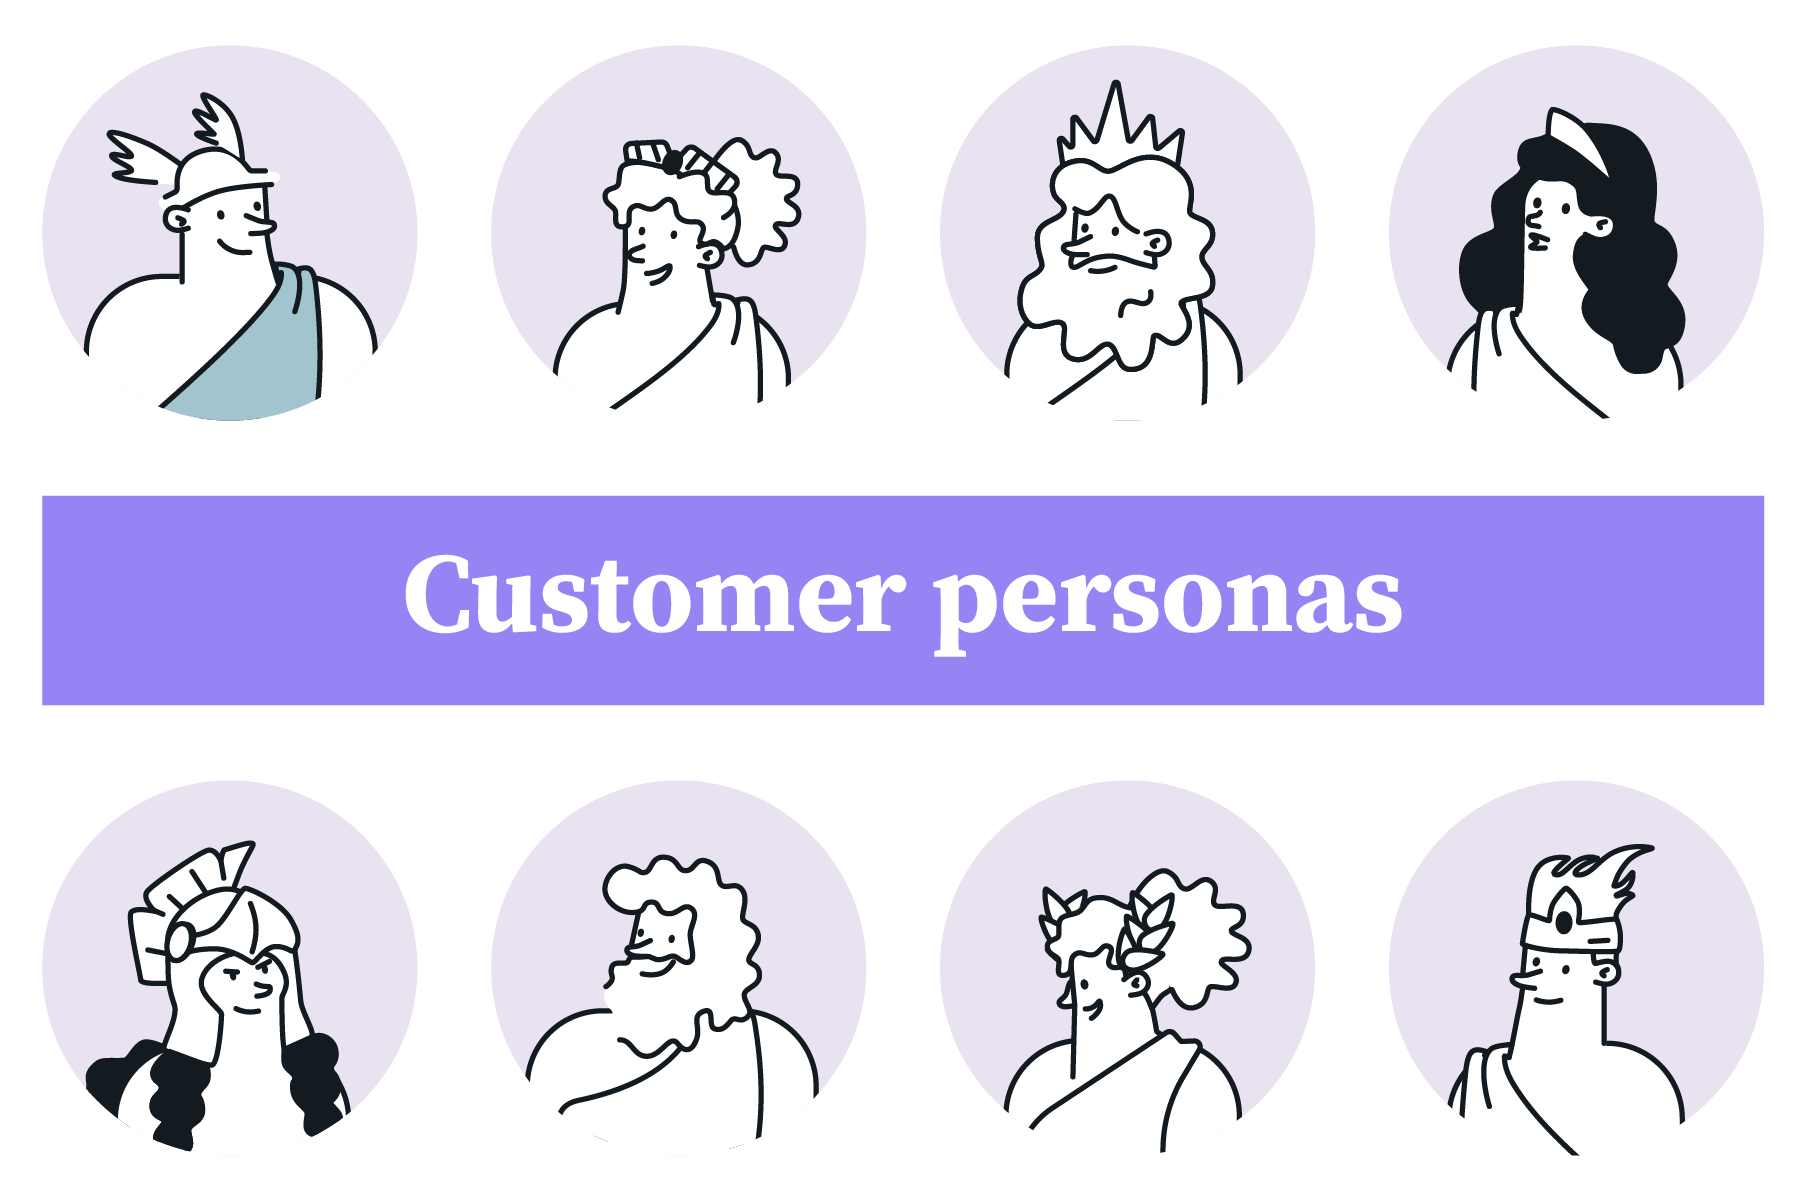 Customer personas as Mailjet’s Greek god graphics.